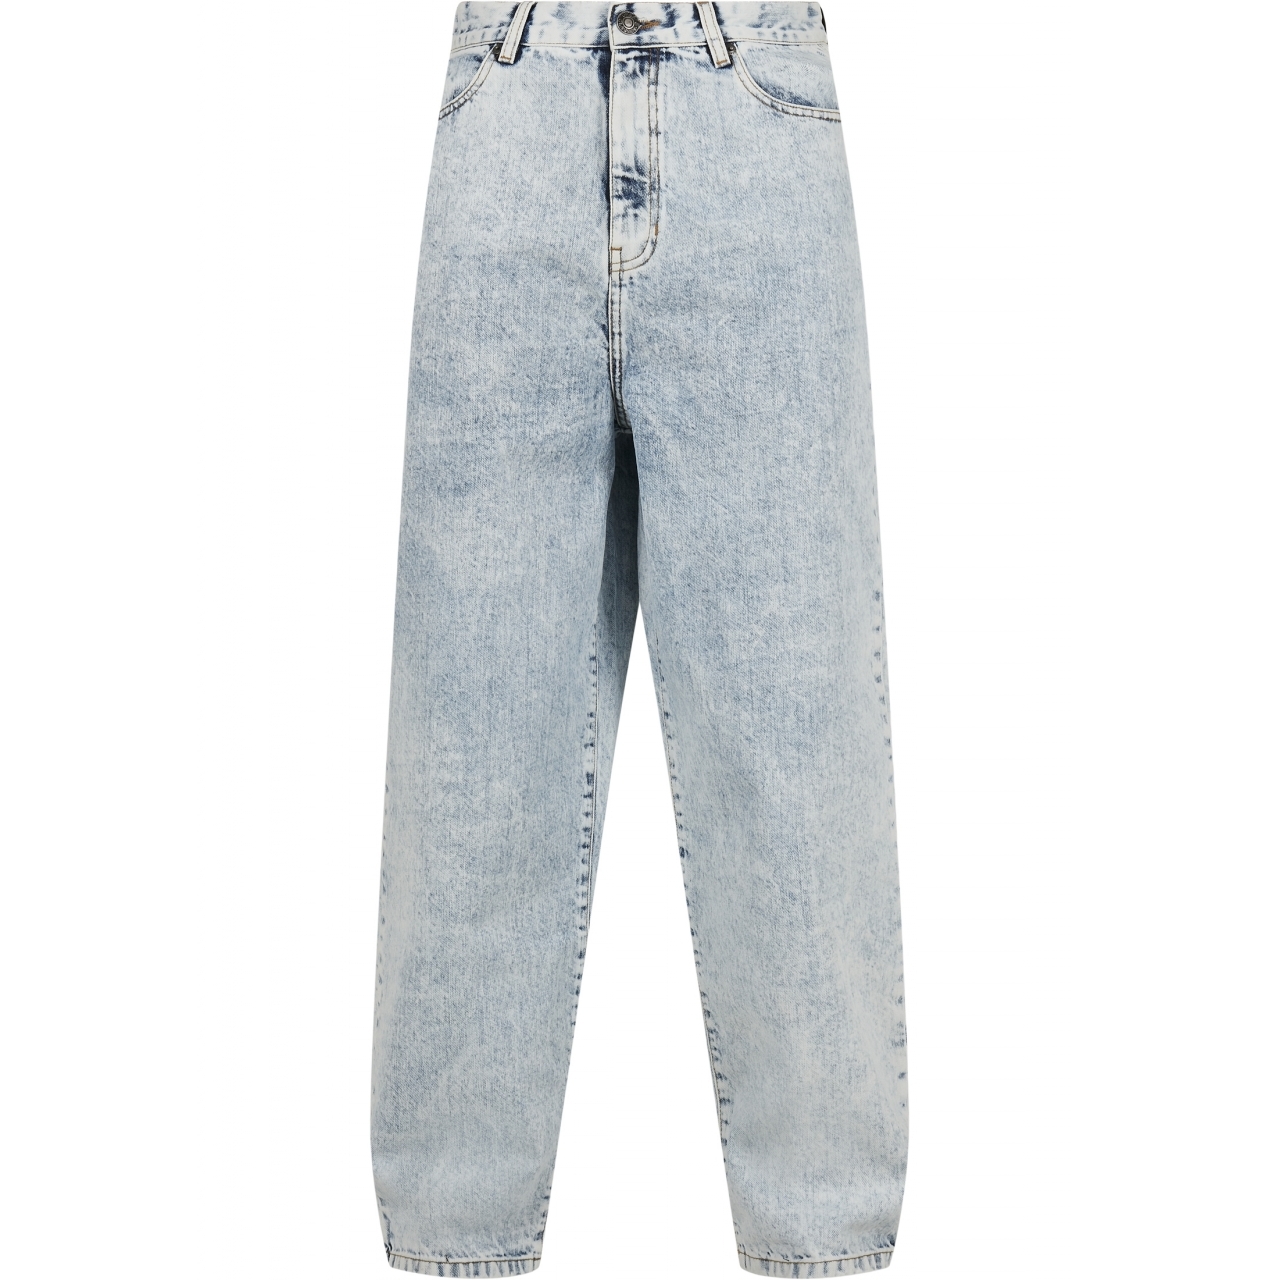 Džíny Urban Classics 90s Jeans - modré, 32